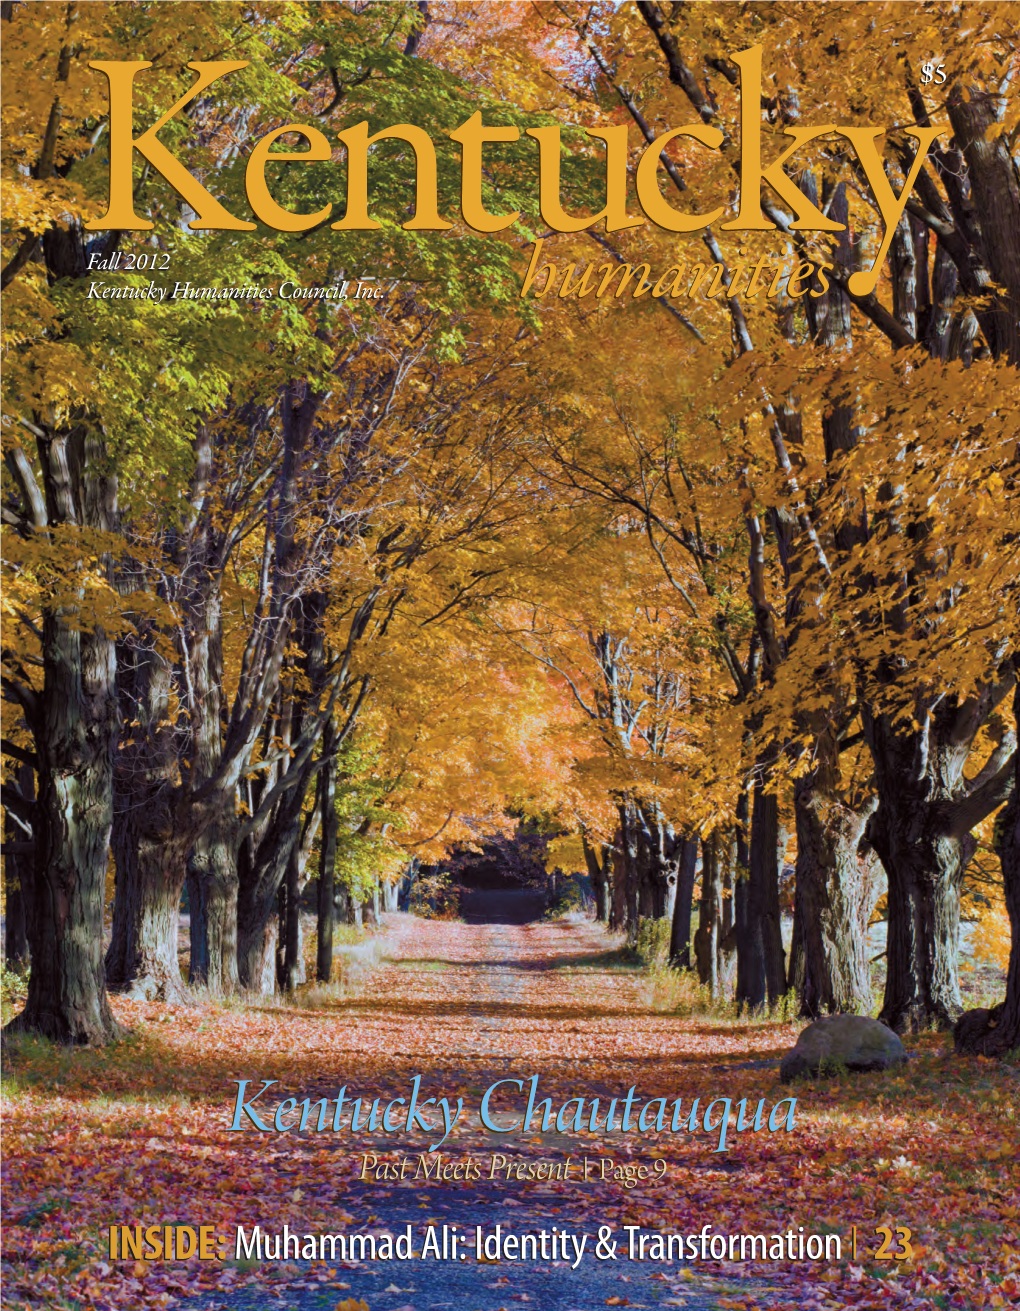 Fall 2012 Kentuckykentucky Humanities Council, Inc